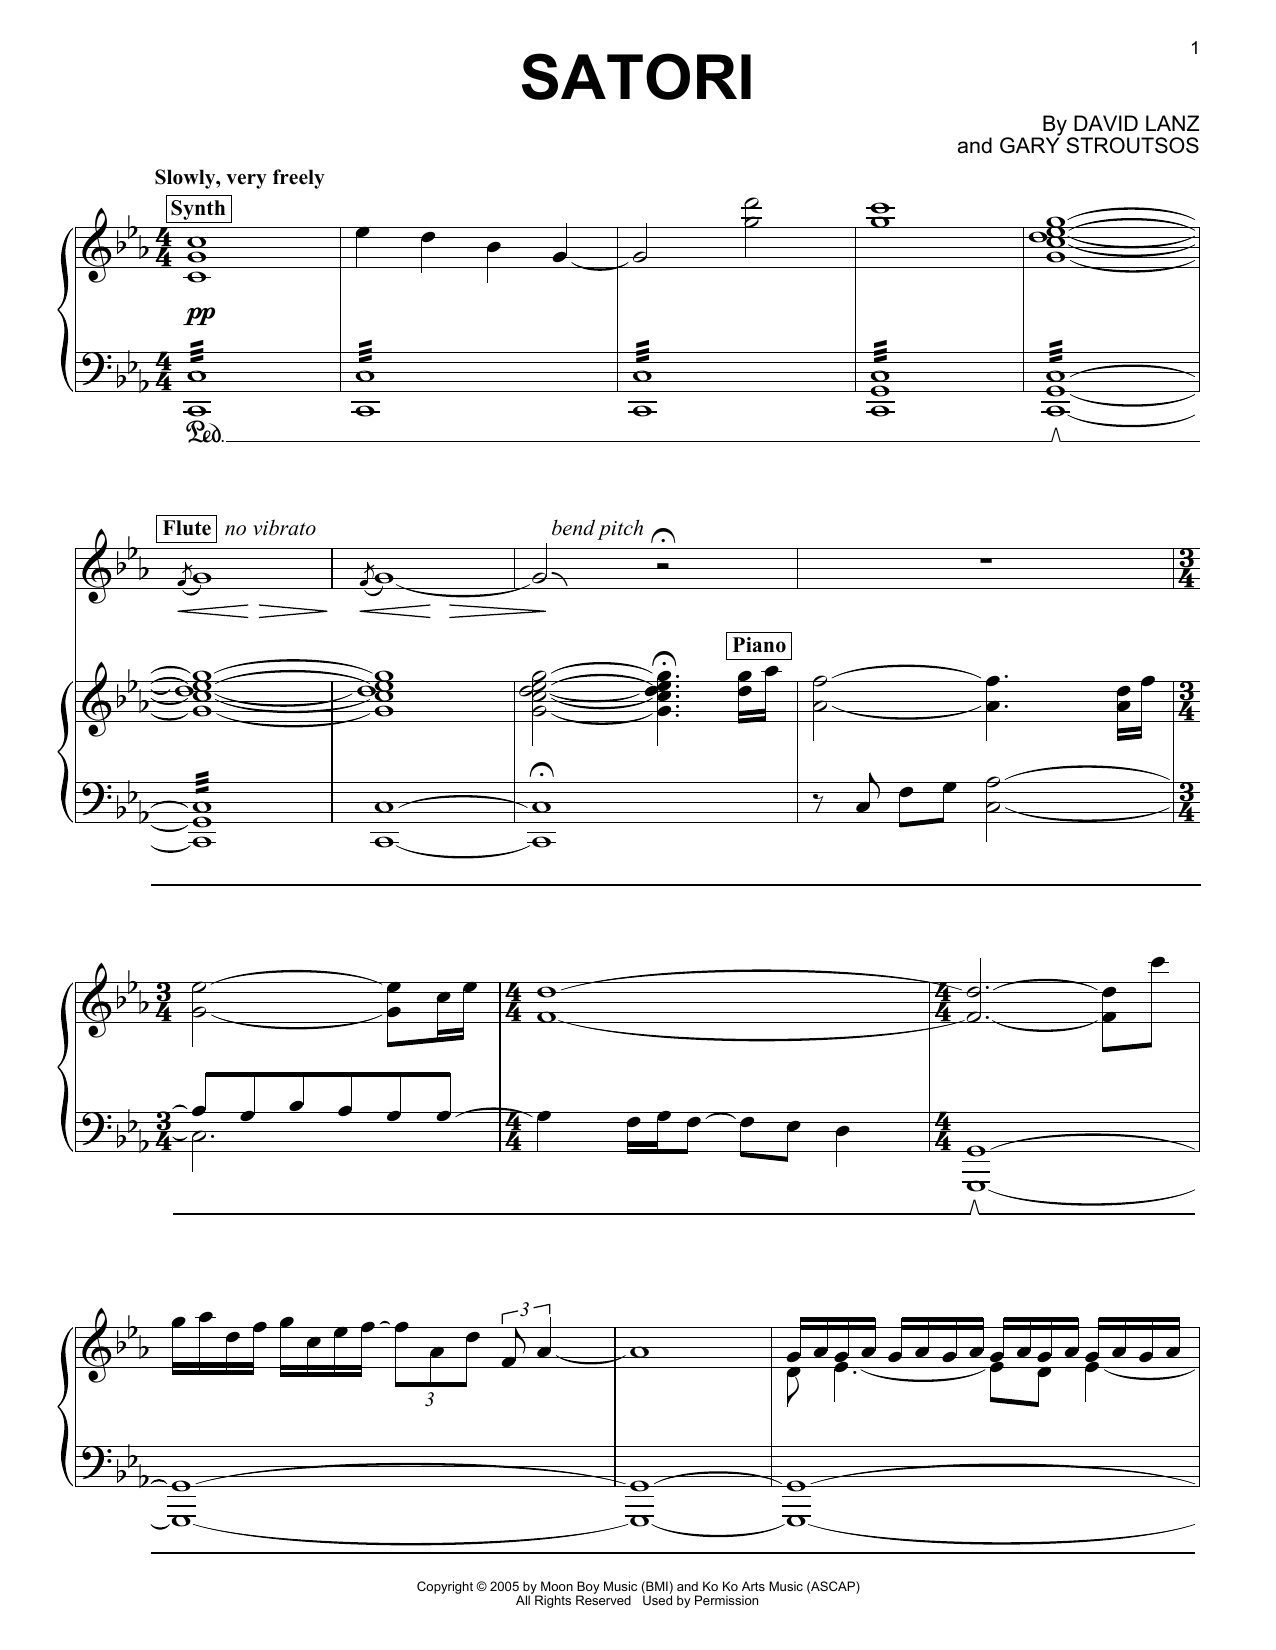 David Lanz & Gary Stroutsos Satori Sheet Music Notes & Chords for Piano Solo - Download or Print PDF